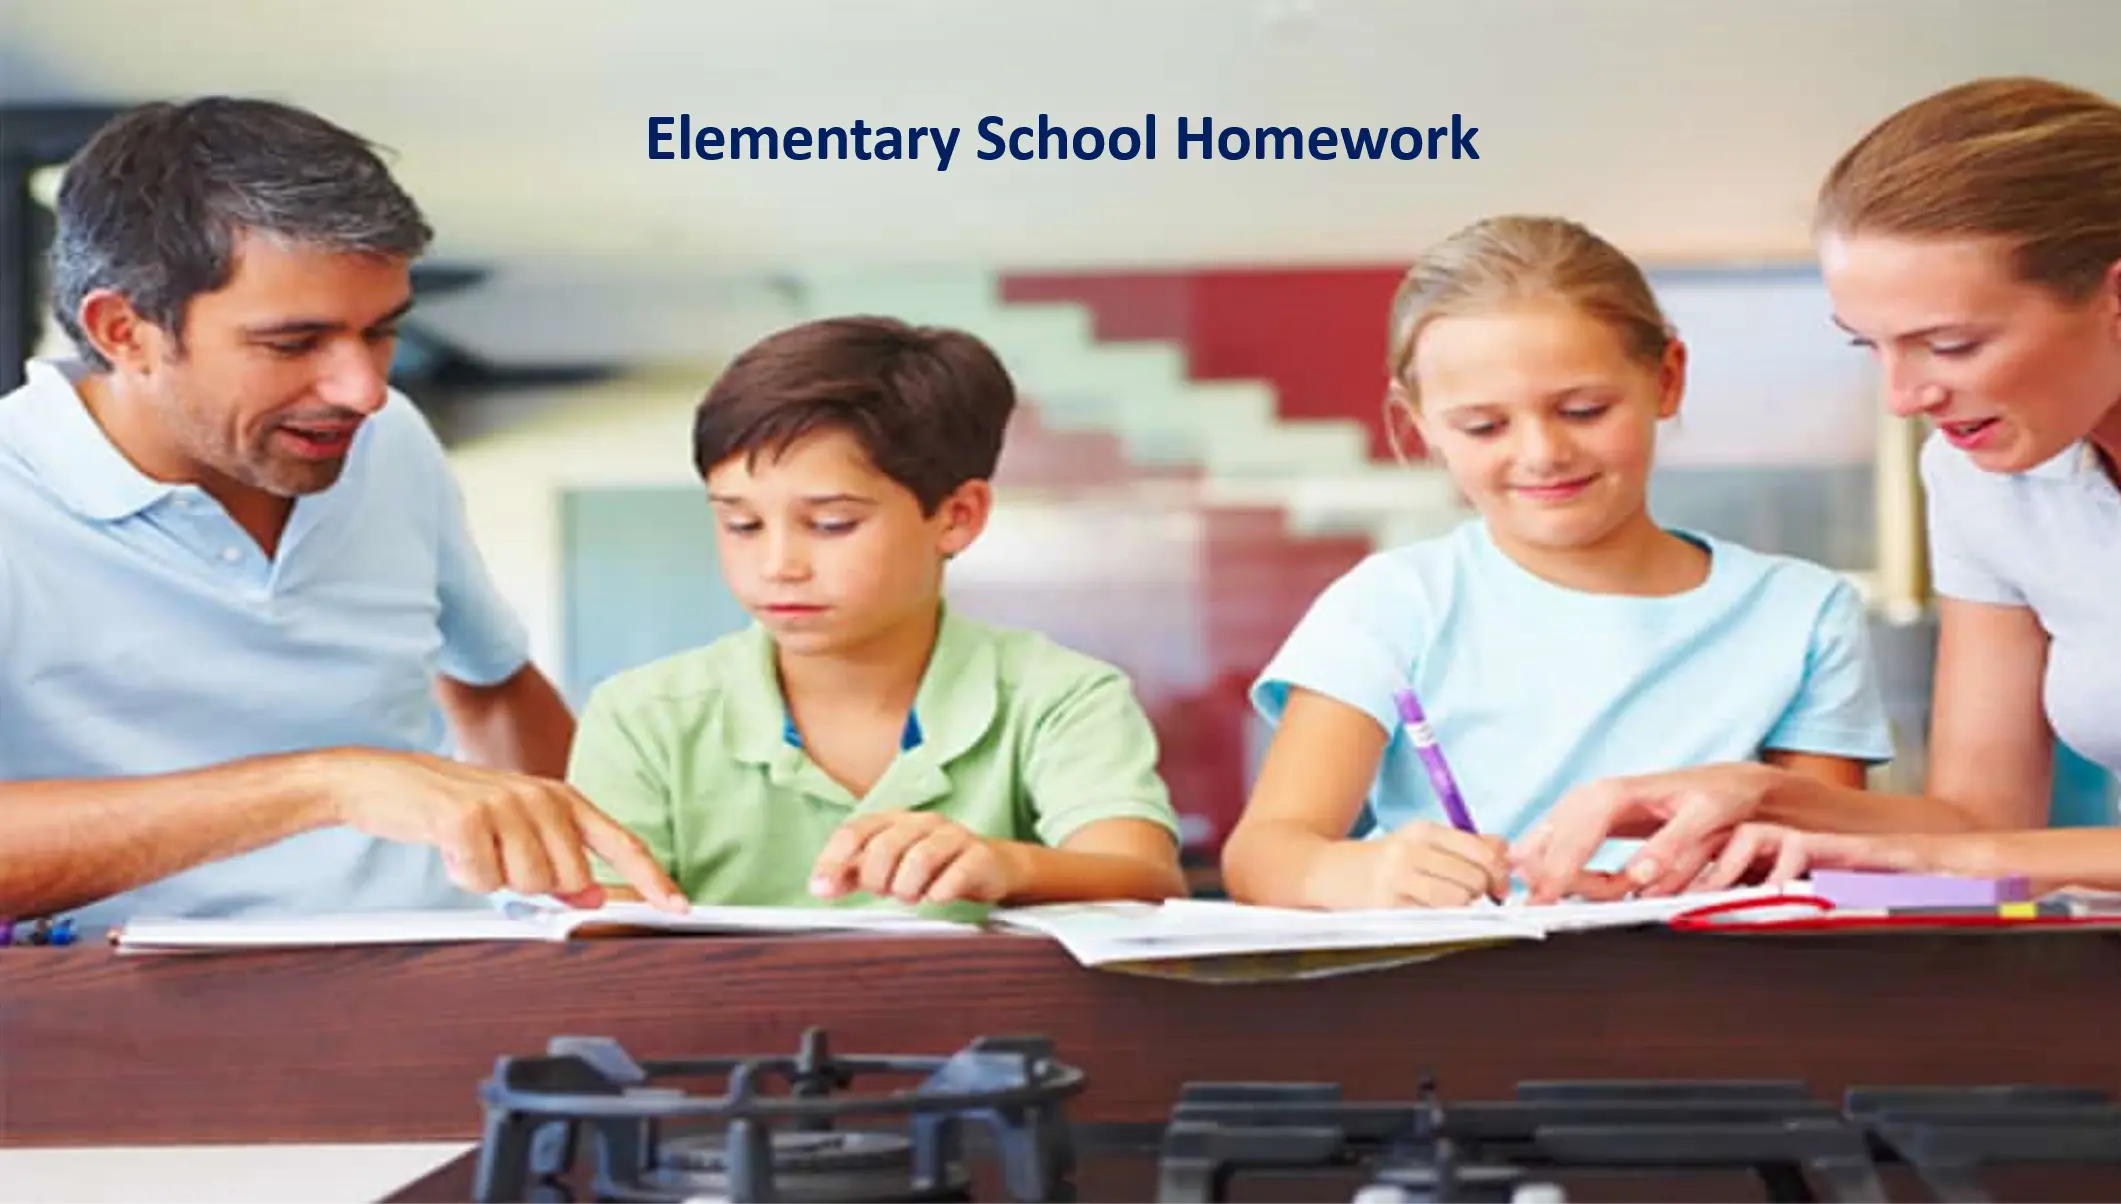 Elementary School Homework: How to Raise Successful Children